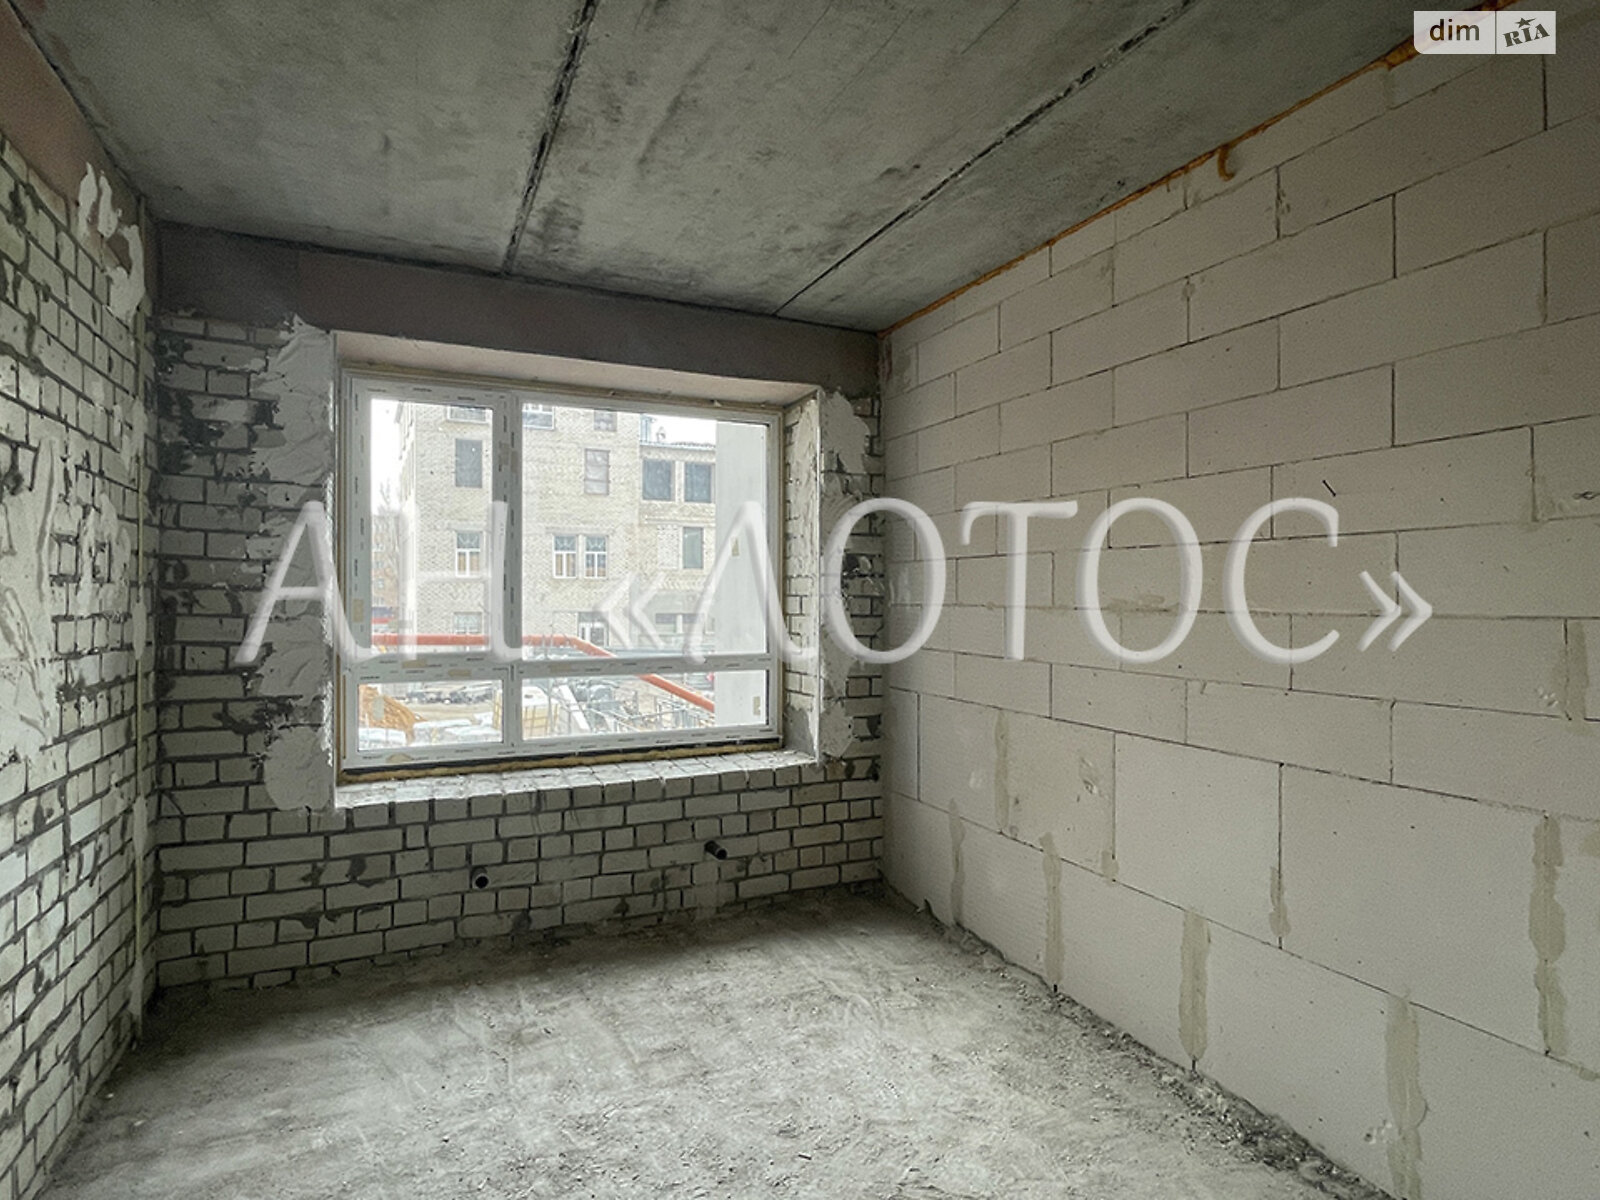 Продажа двухкомнатной квартиры в Николаеве, на ул. Курортная 7В, район Лески фото 1